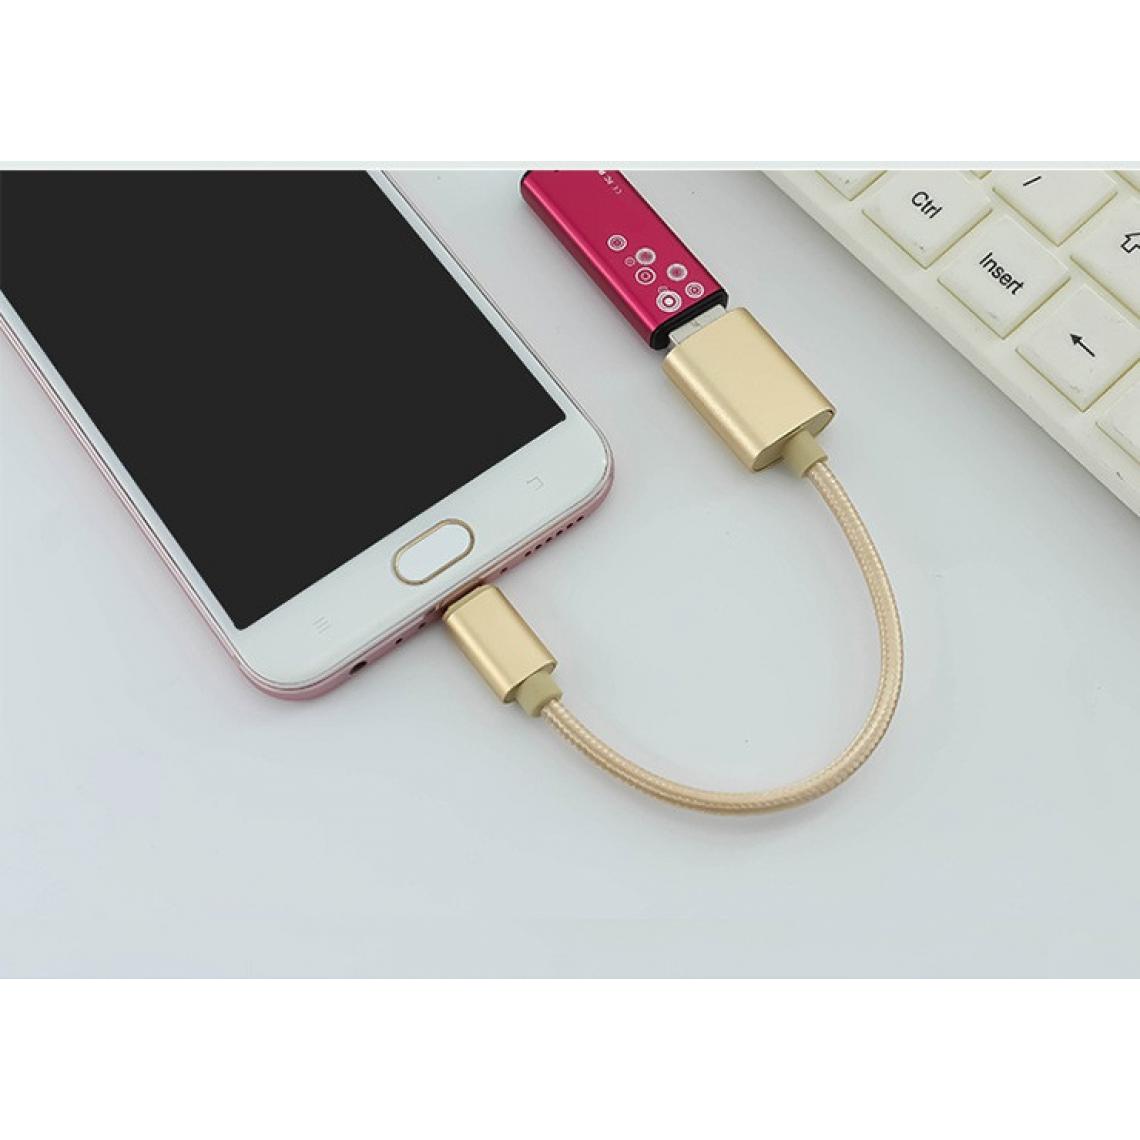 Shot - Adaptateur Type C/USB pour SAMSUNG Galaxy A31 Smartphone & MAC USB-C Clef (OR) - Autres accessoires smartphone